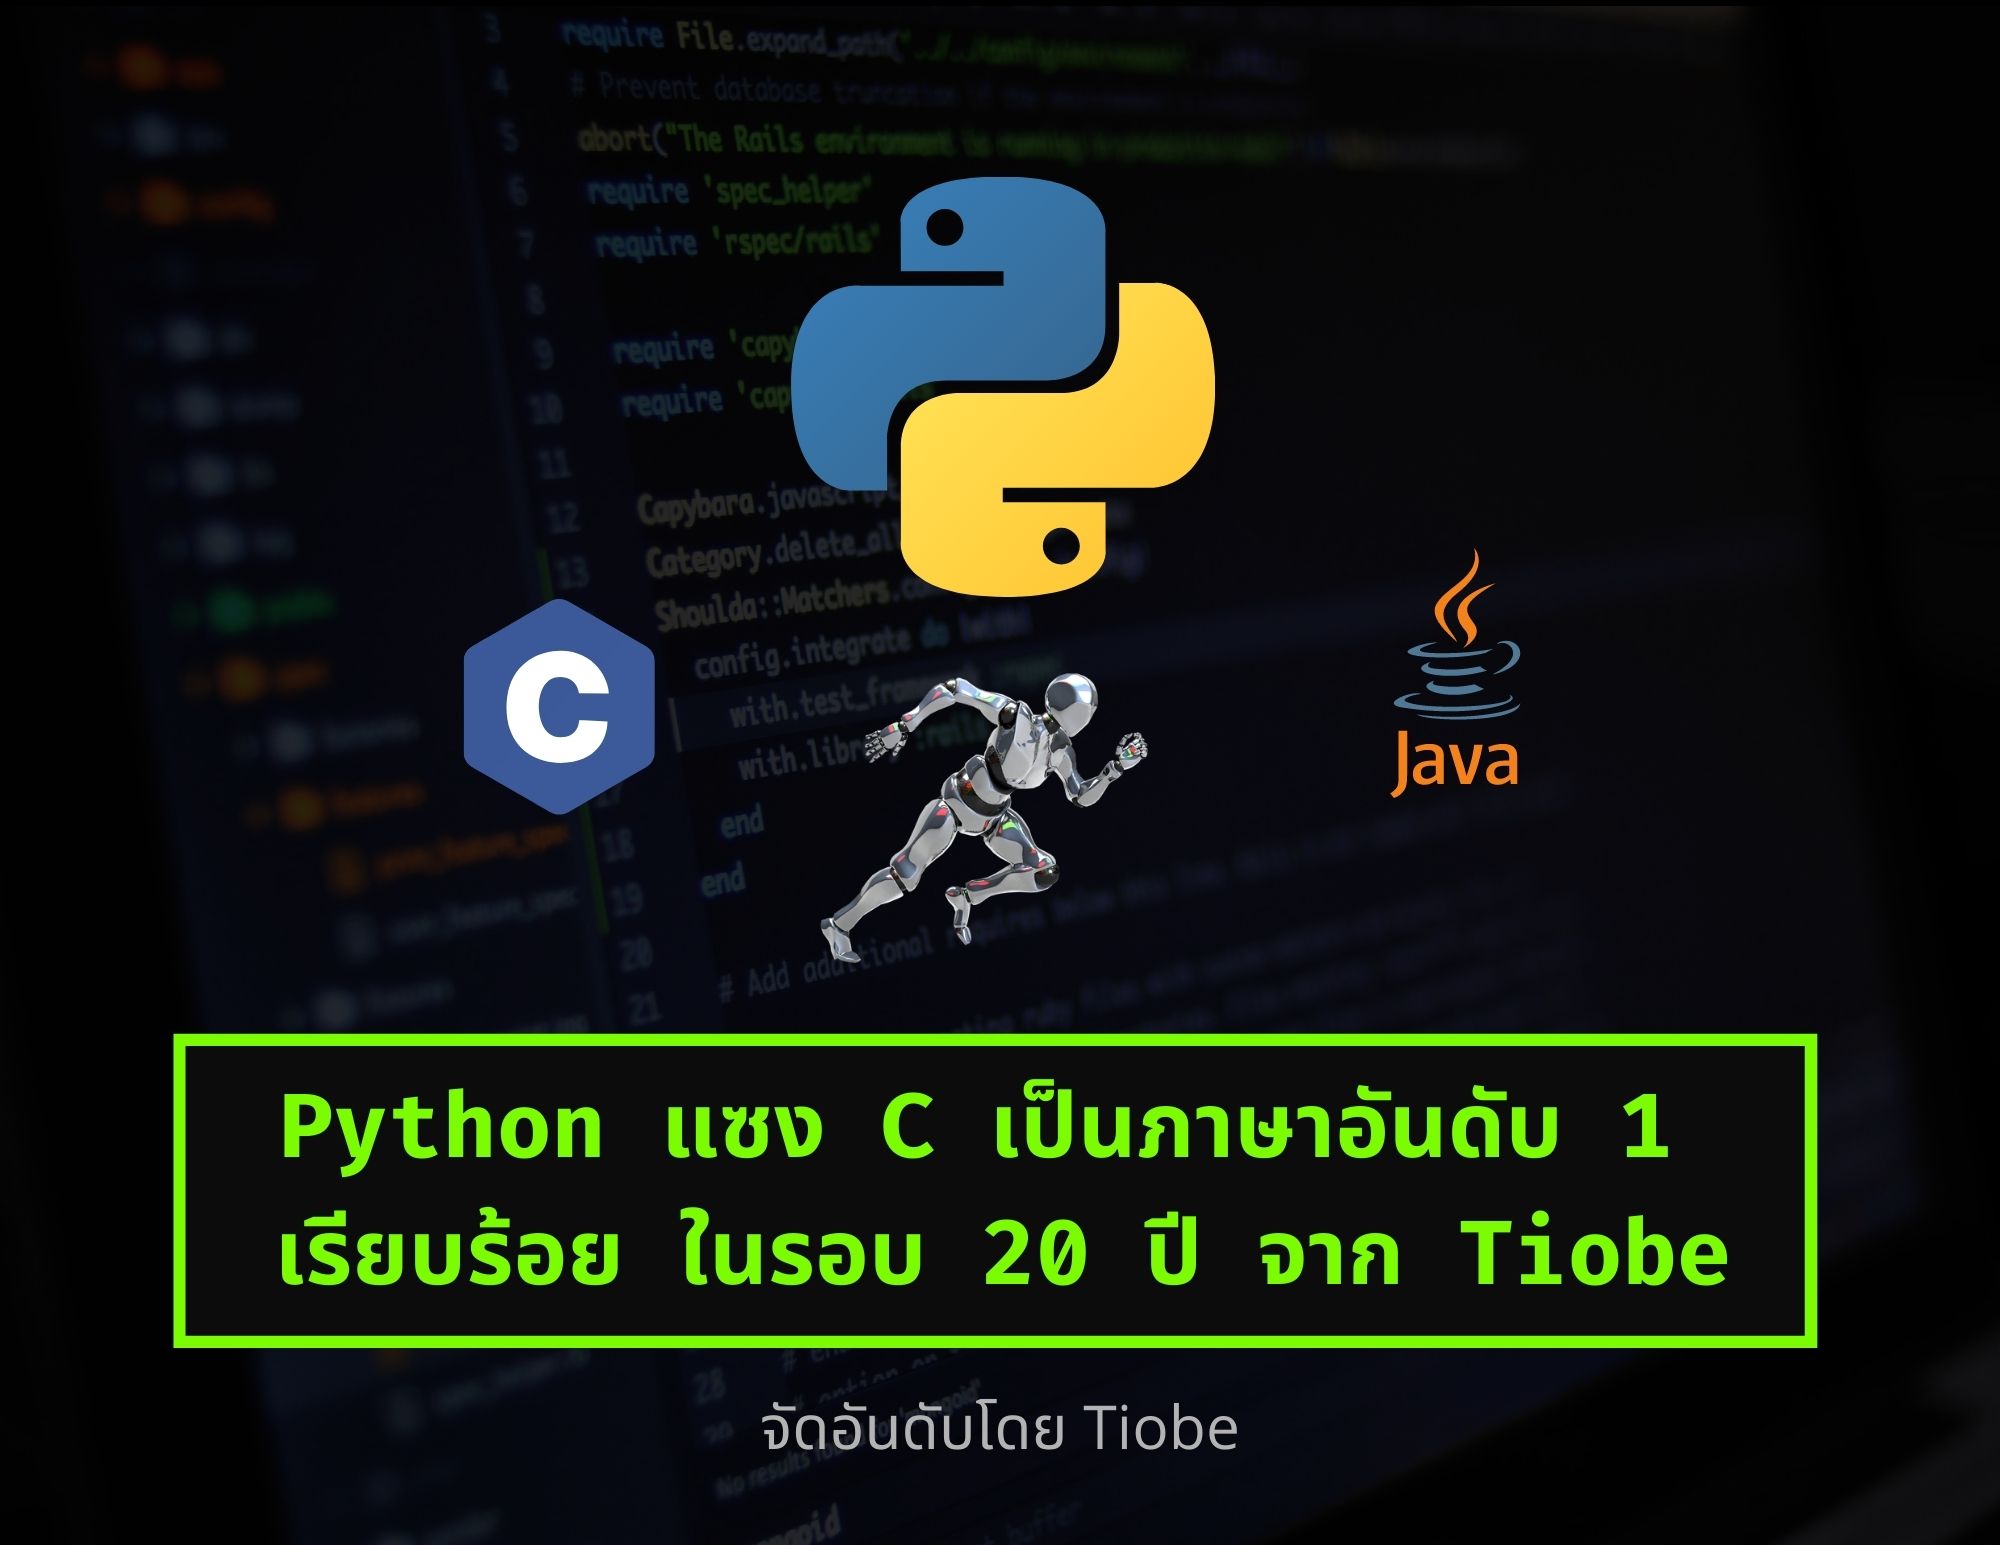 Python แซง C & Java ขึ้นเป็นอันดับ 1 จาก Tiobe  index